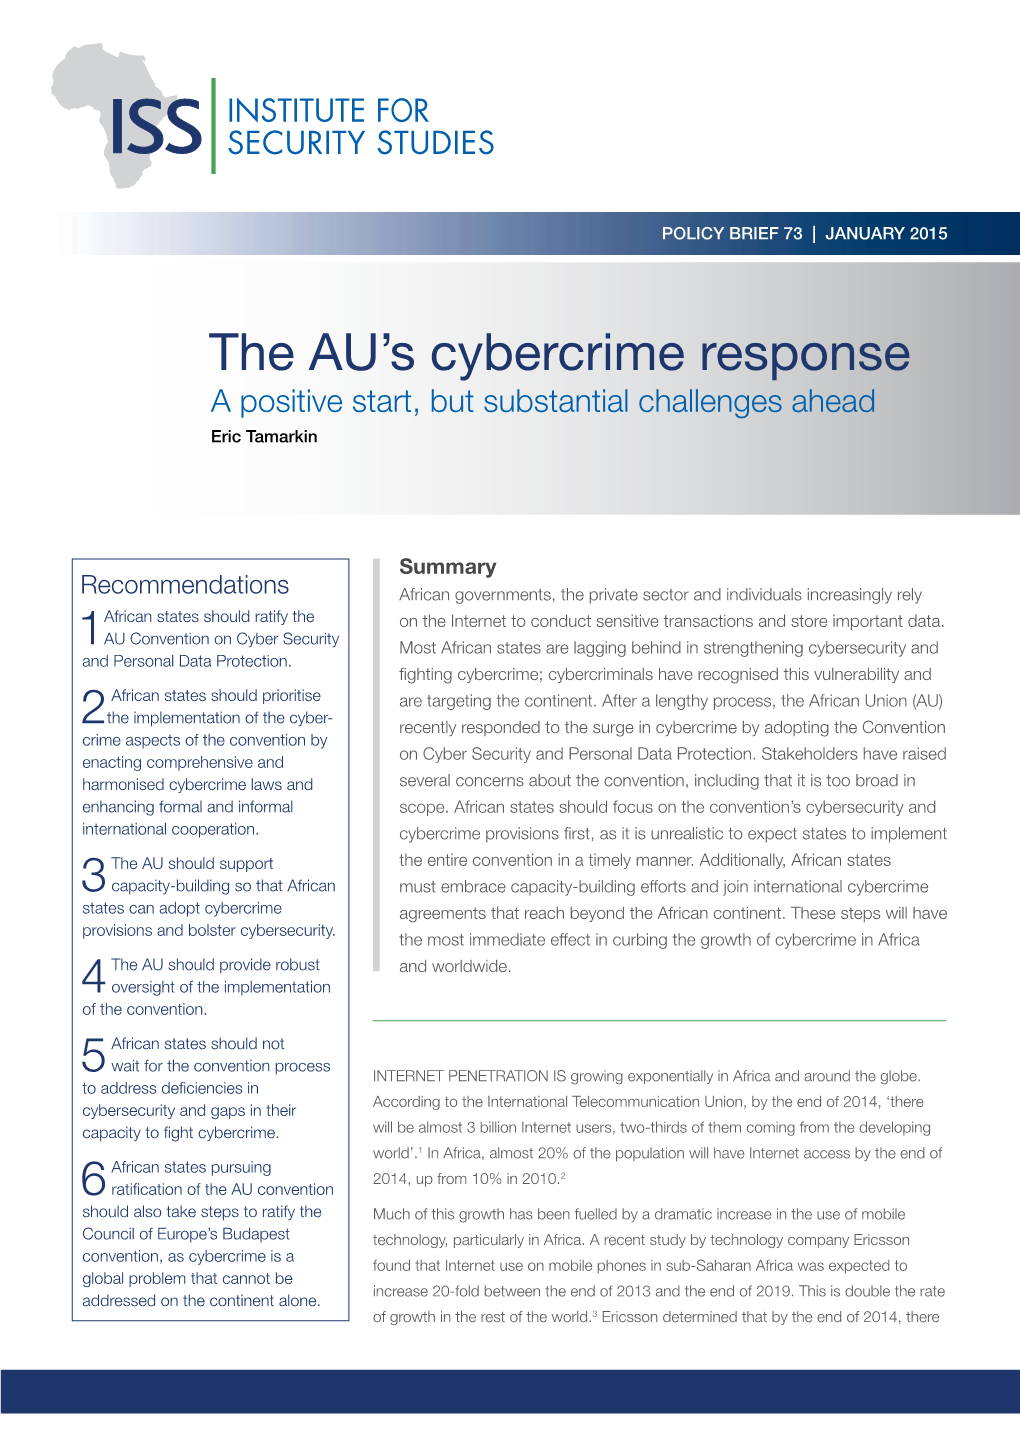 The AU's Cybercrime Response